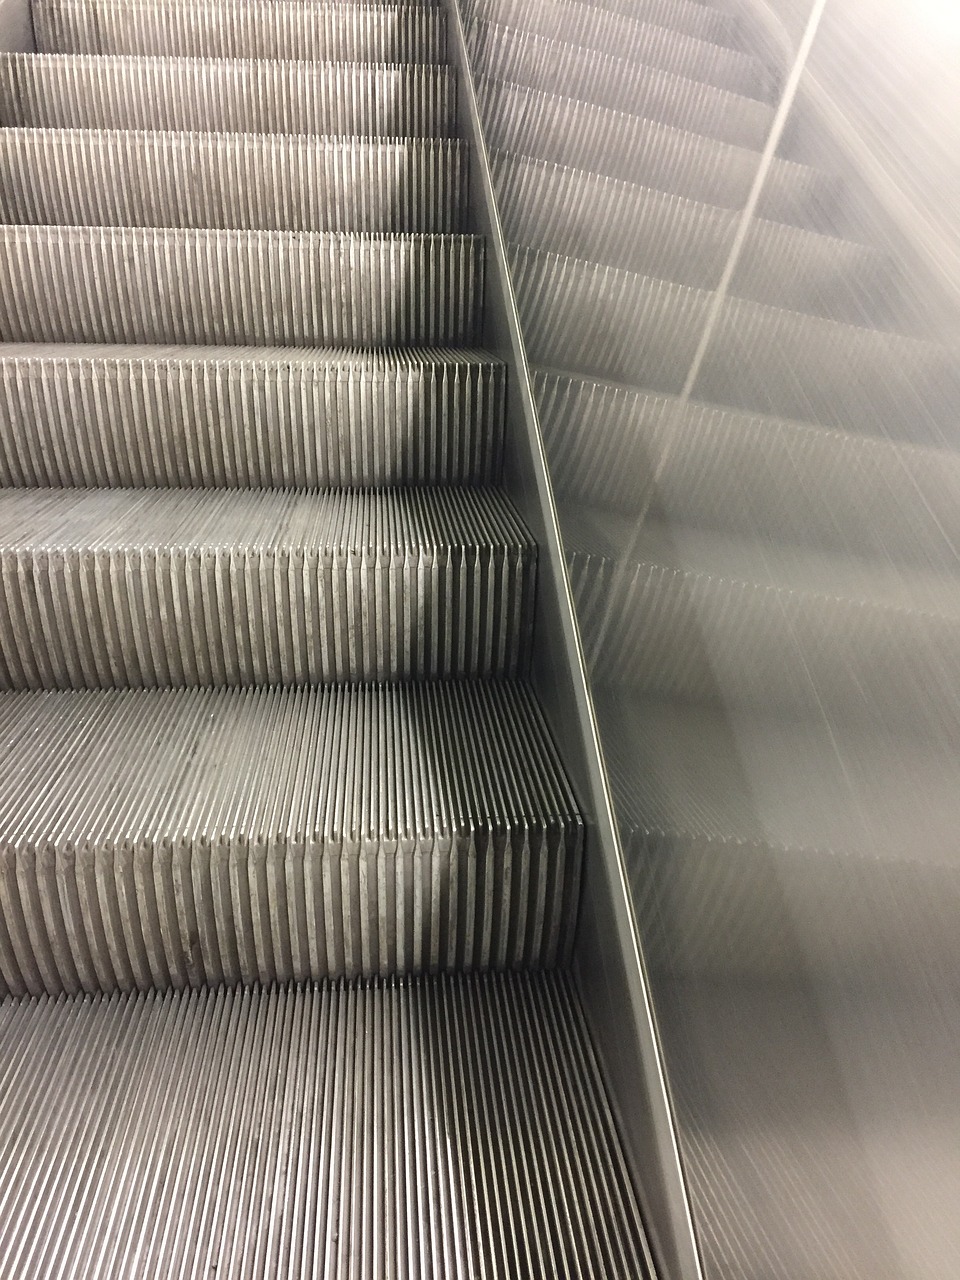 escalator  stairs  railway station free photo